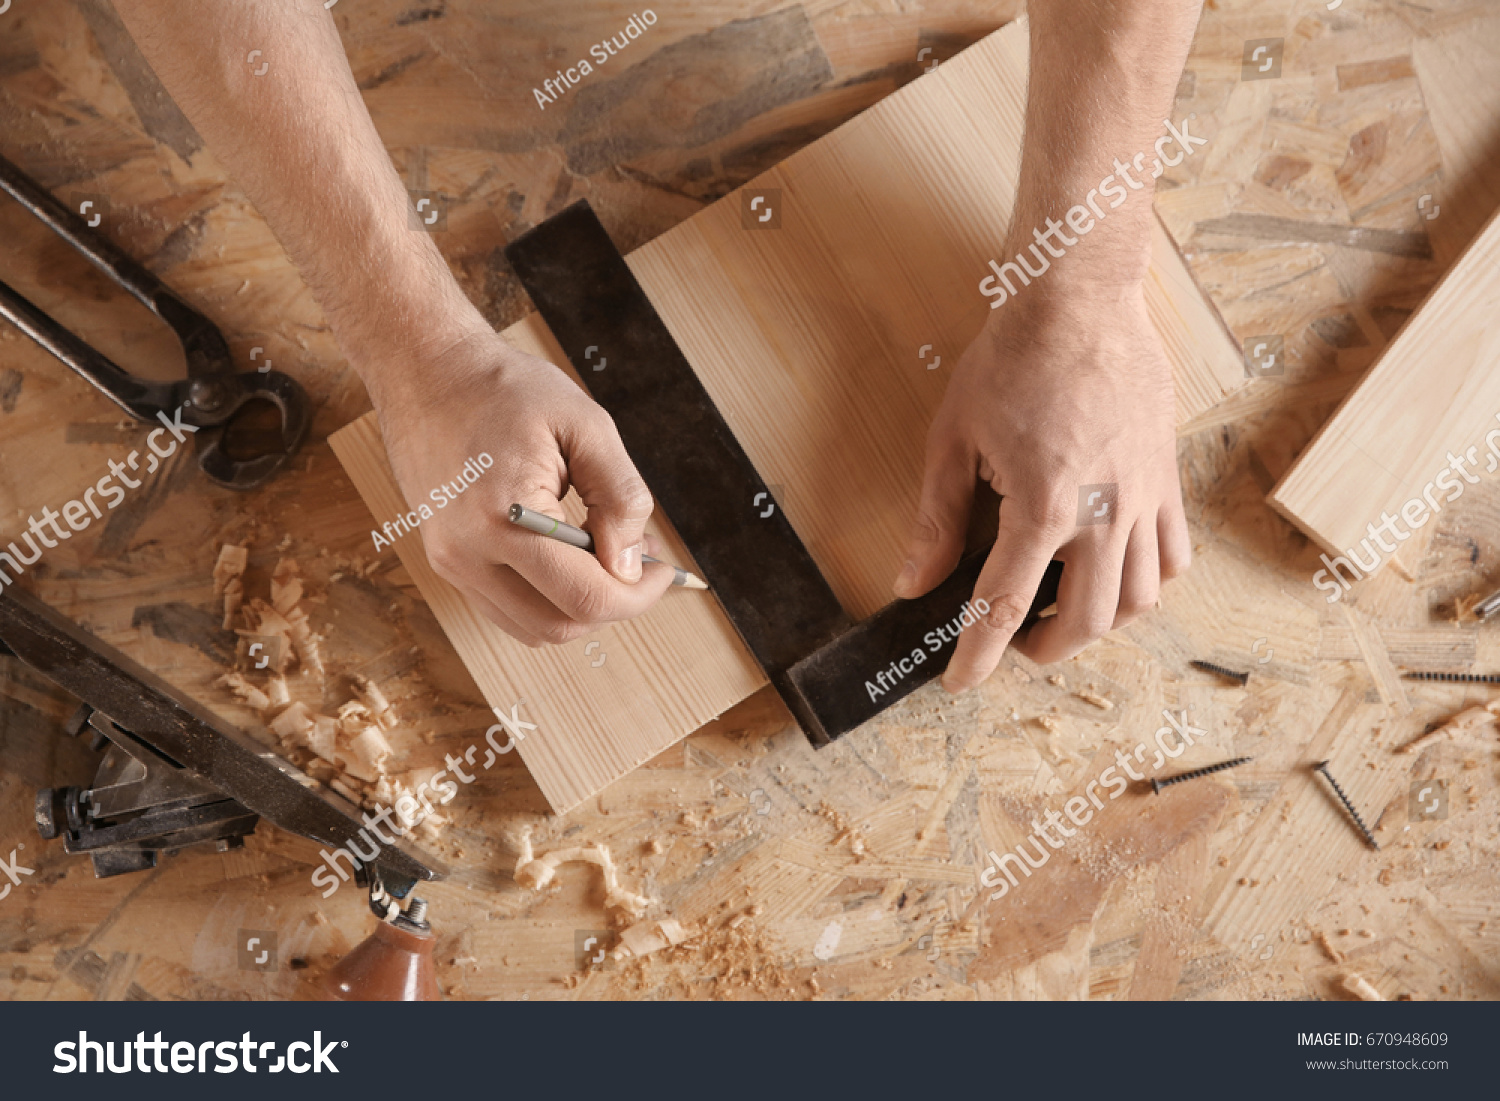 Carpenter marking wooden board in workshop #670948609